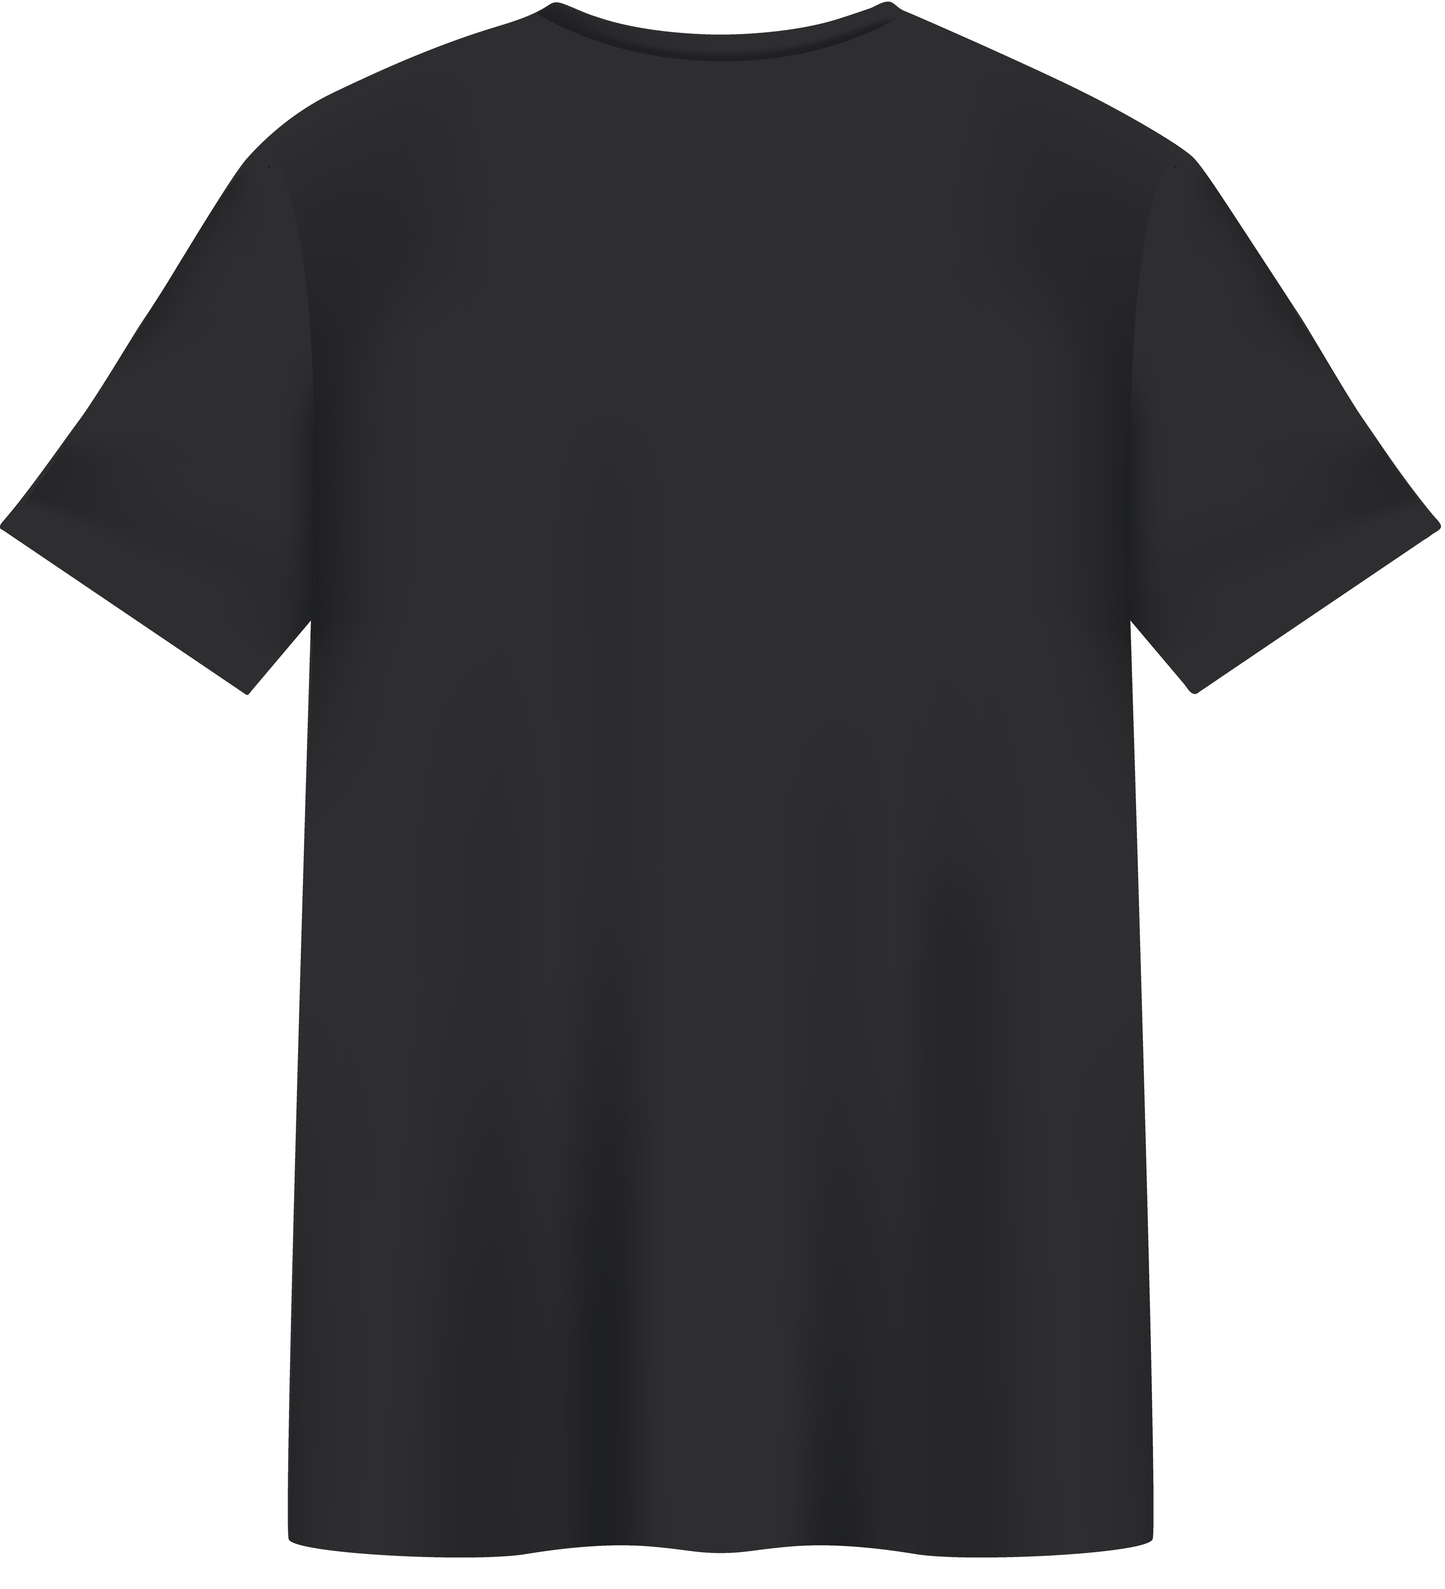 ARENAS Black T-Shirt